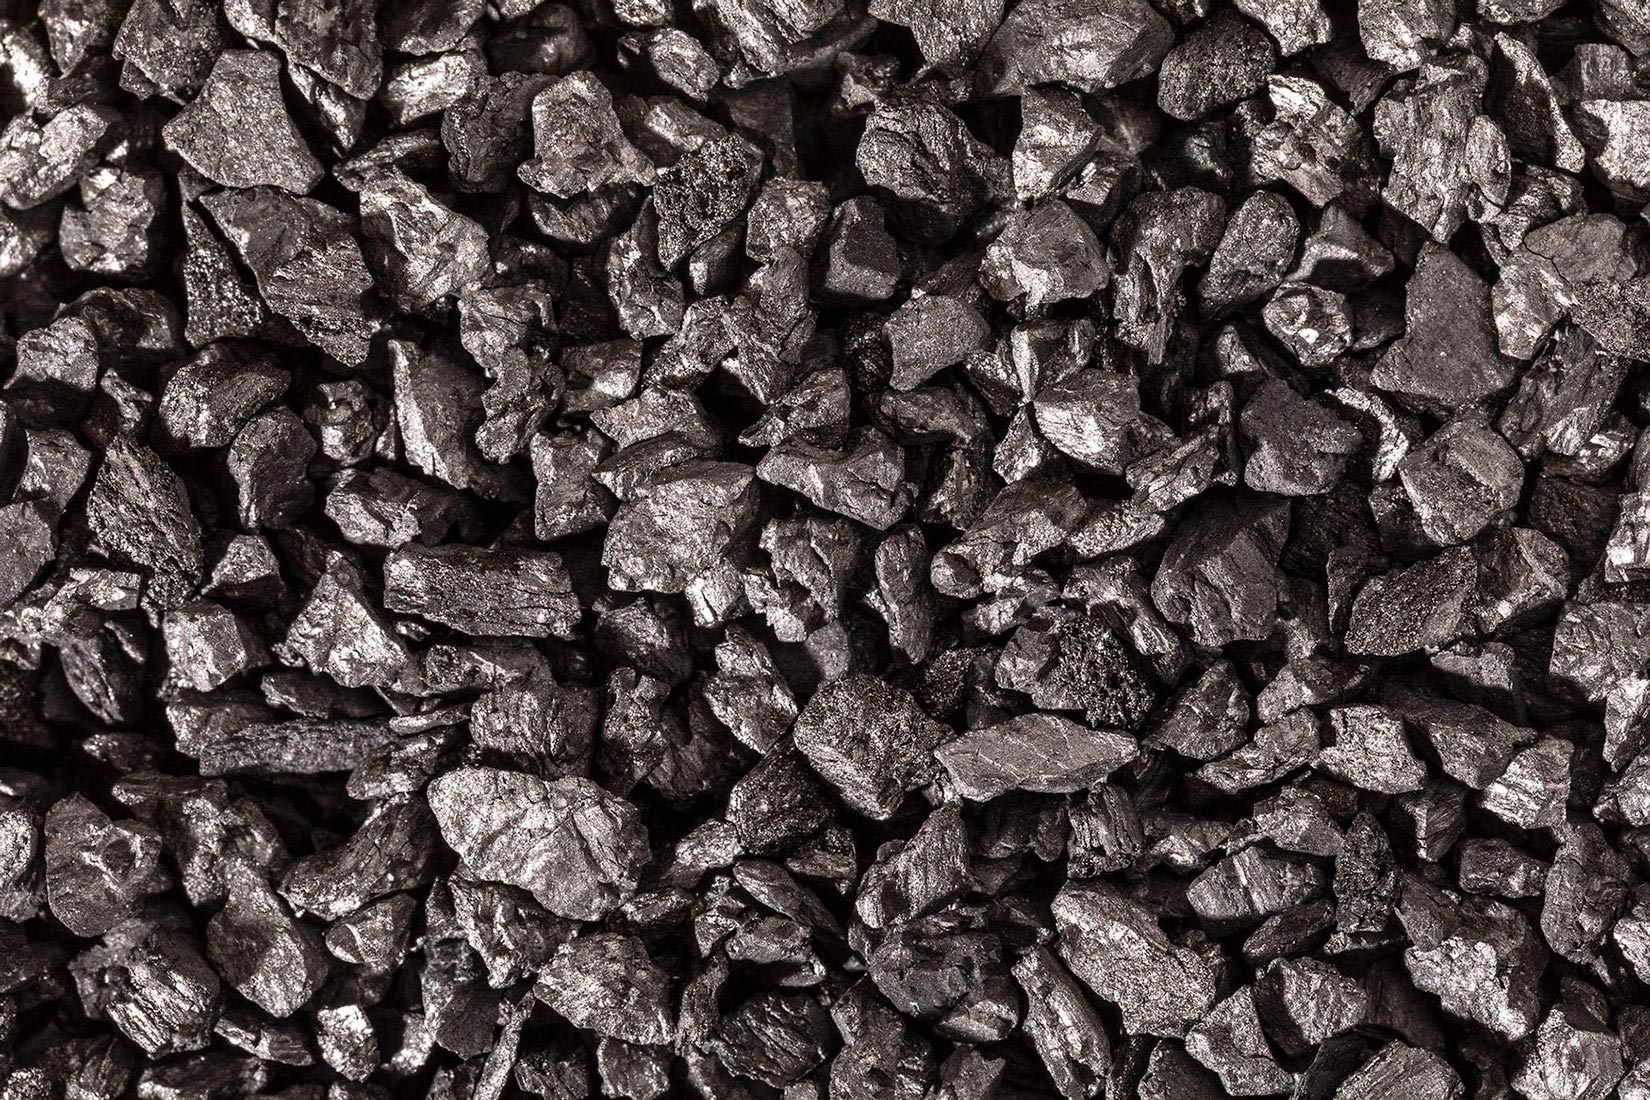 Fotografija prikazuje komadiće aktivnog ugljena sive boje i nepravilna oblika.